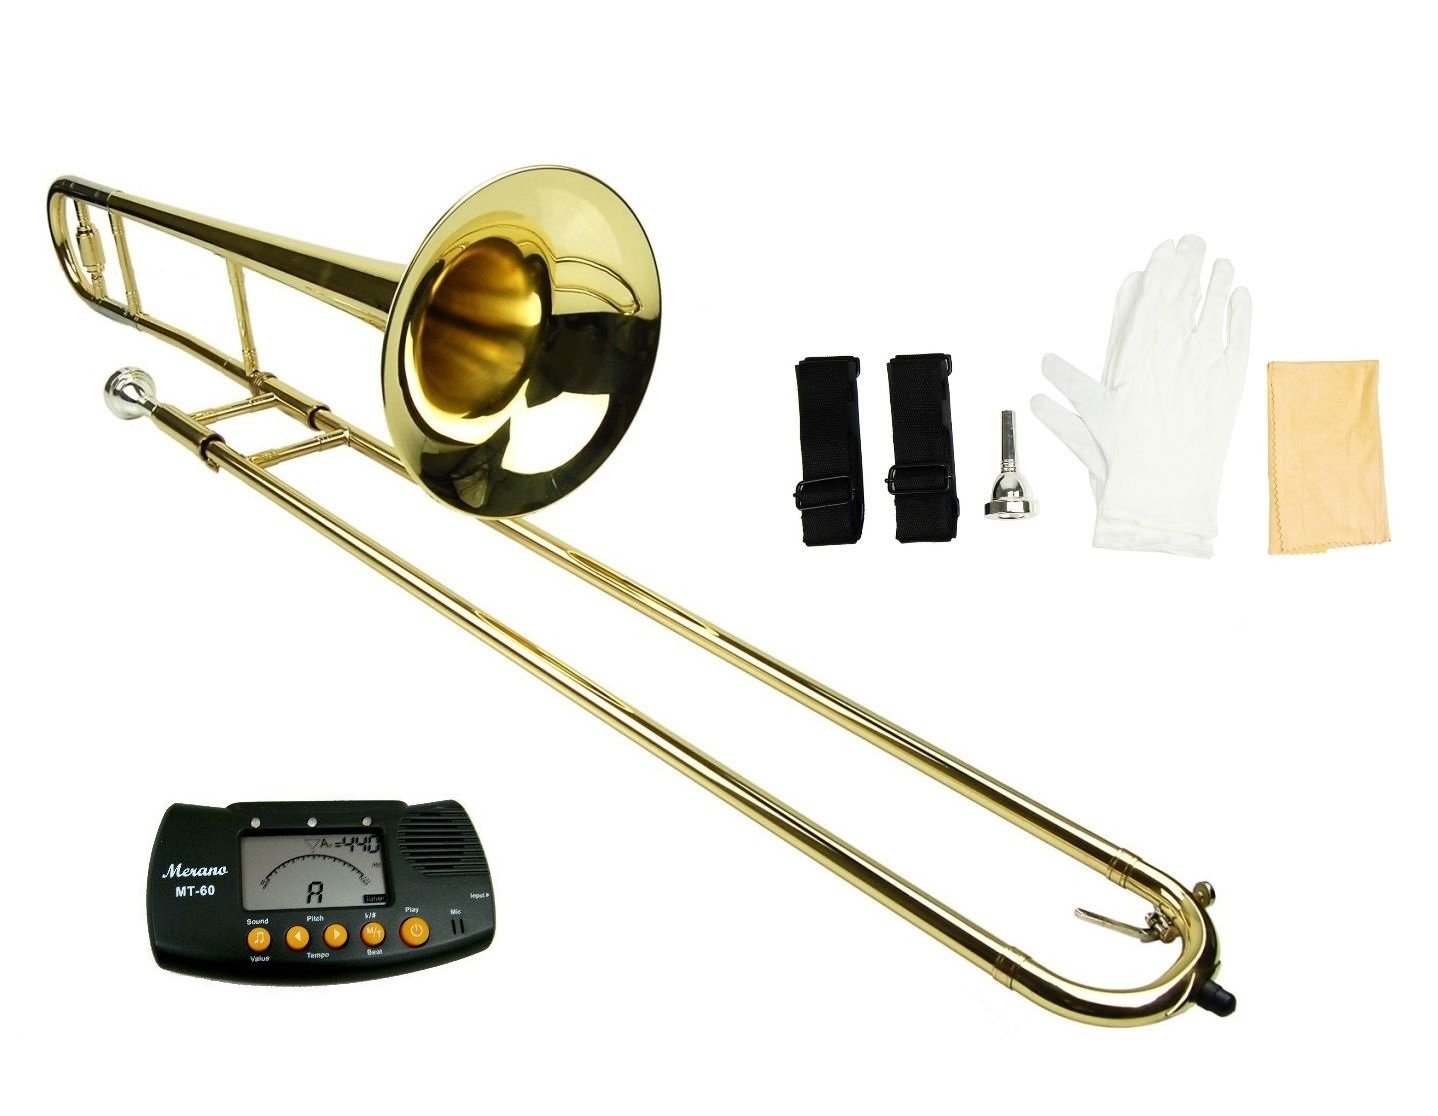 online chromatic tuner trombone